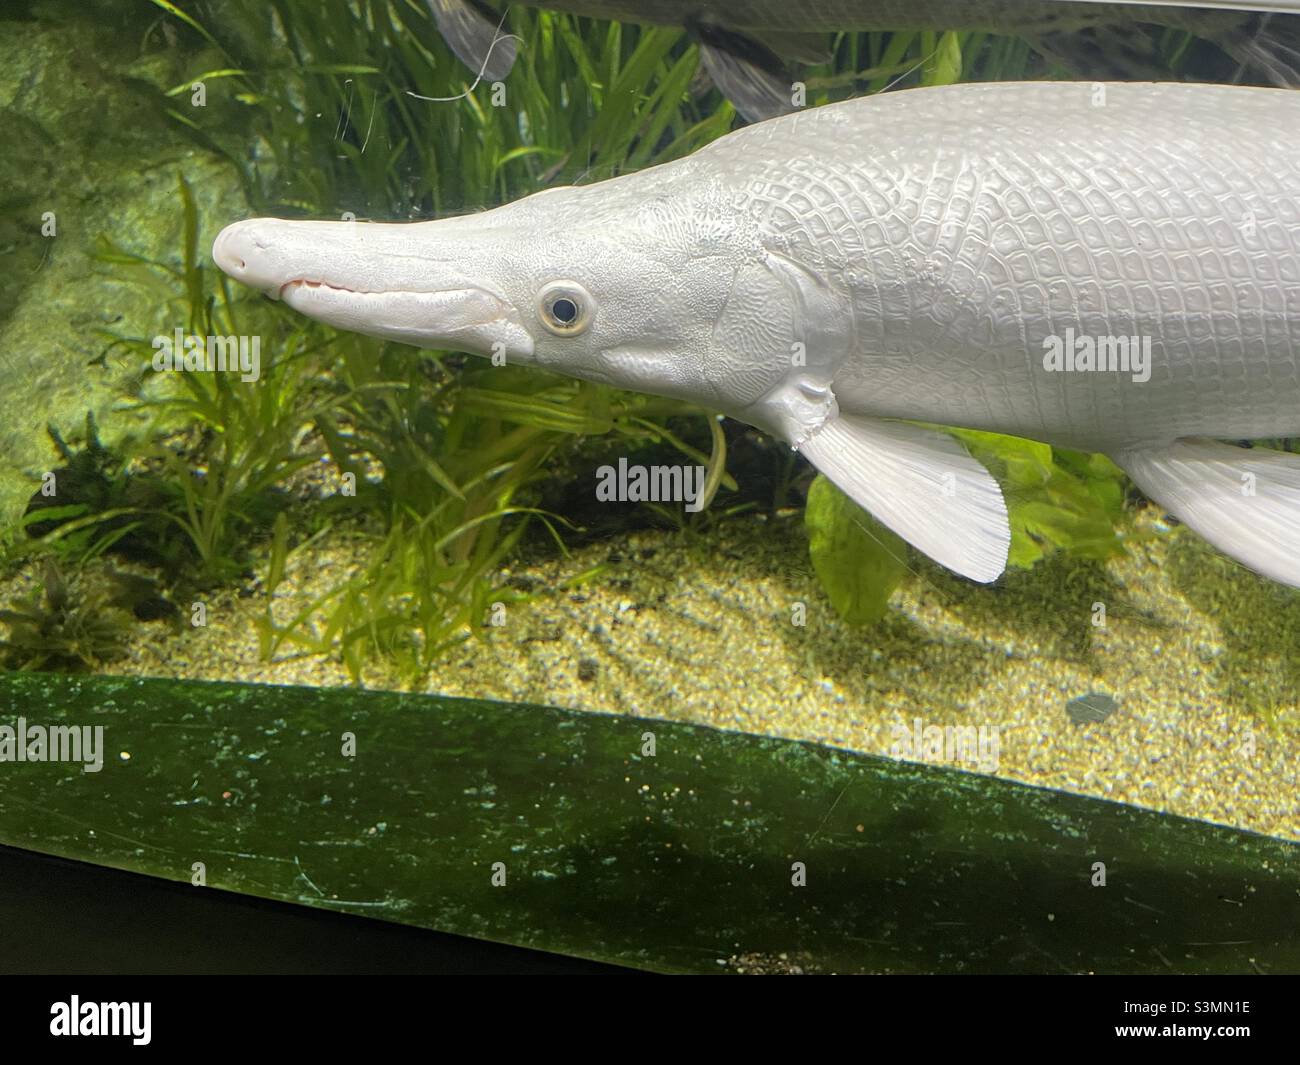 White alligator gar fish Stock Photo